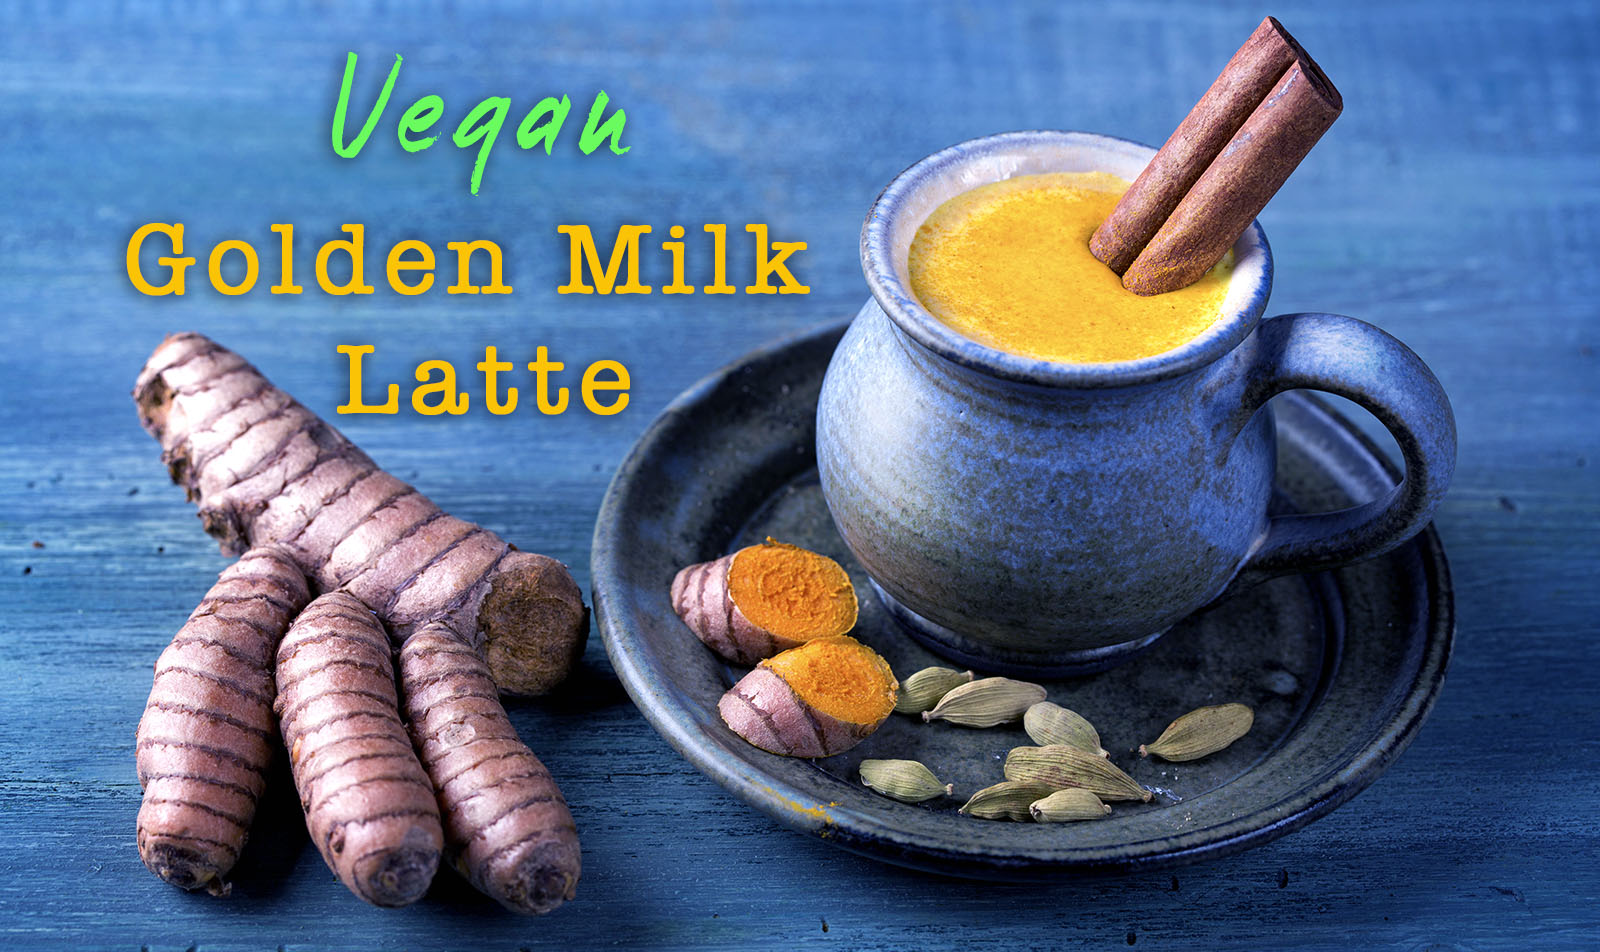 Vegan Golden Milk Latte Image